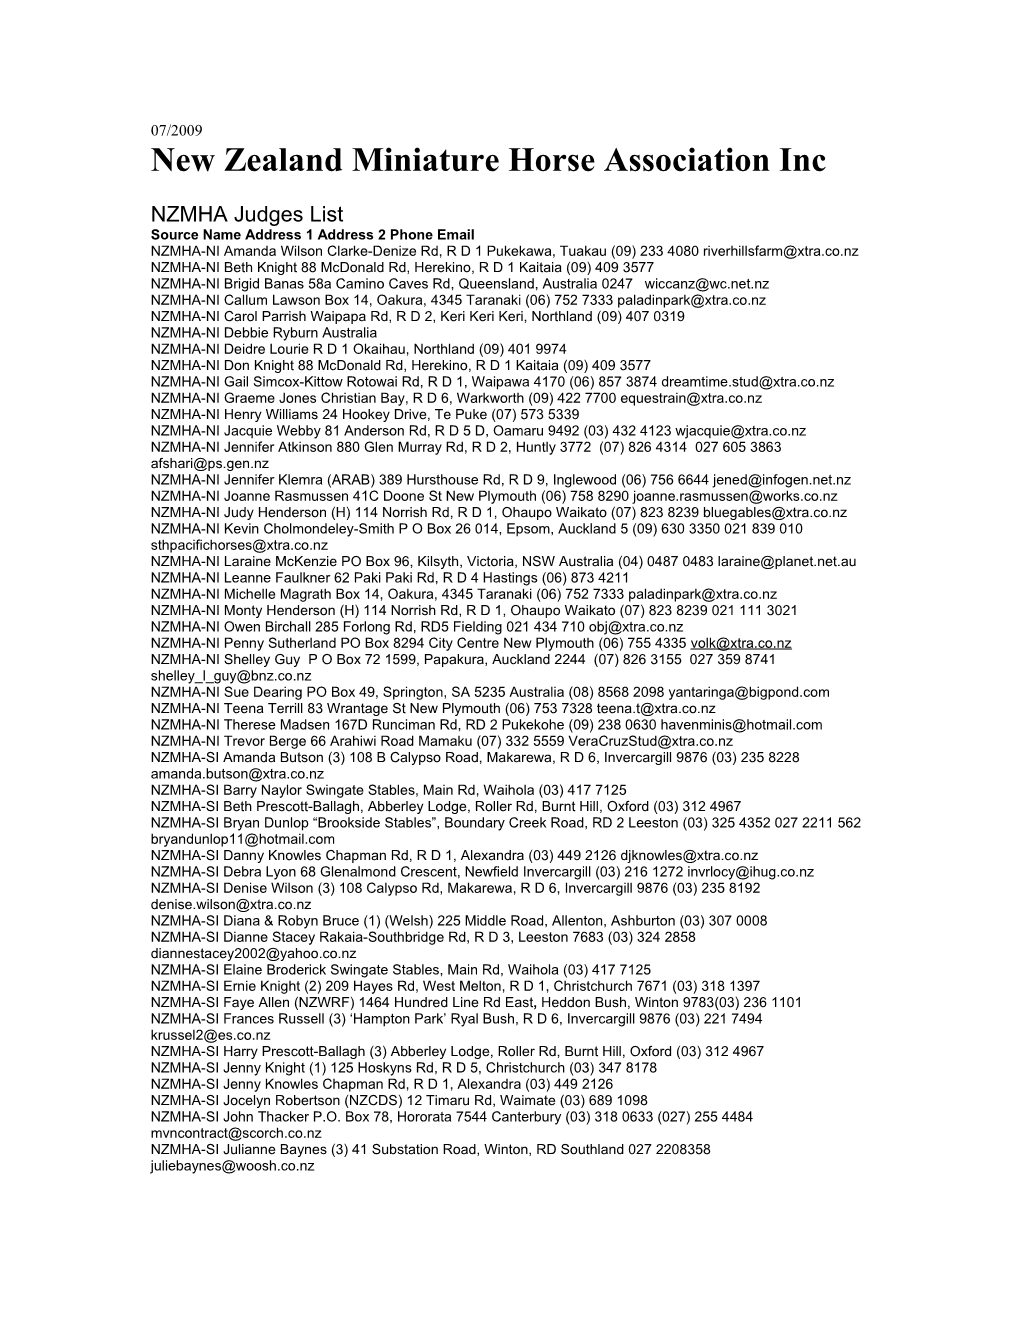 New Zealand Miniature Horse Association Inc